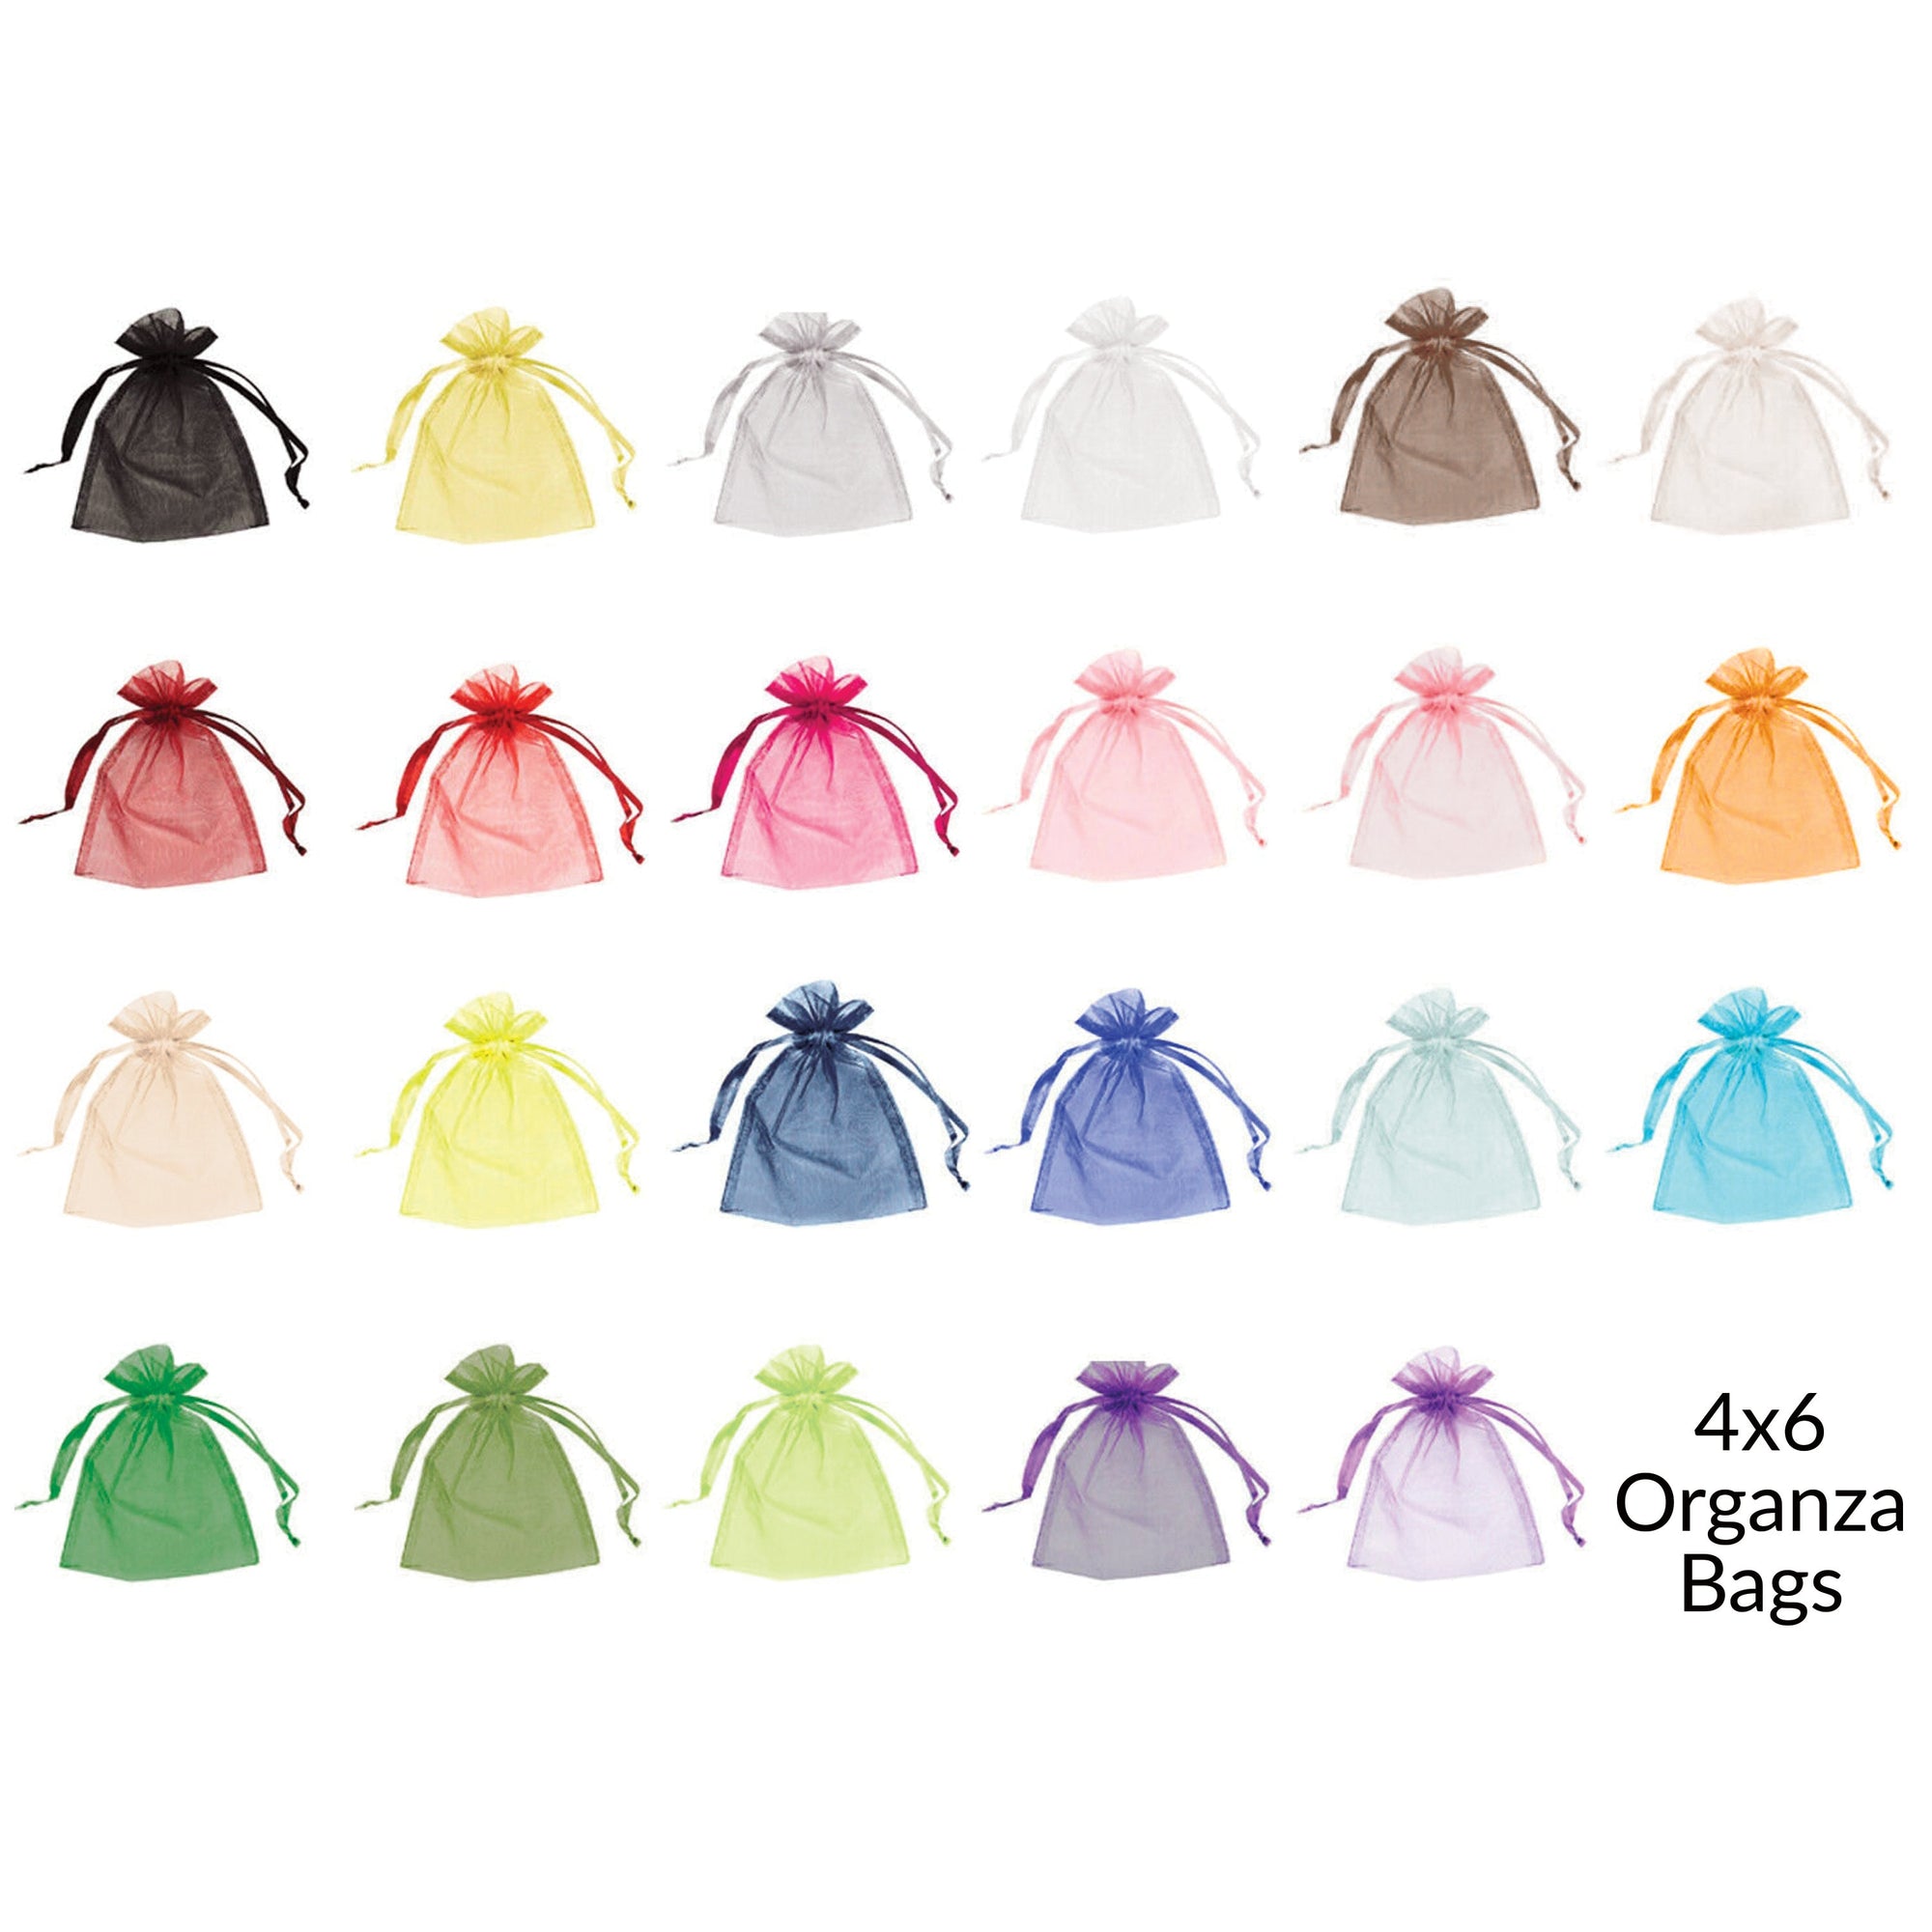 Organza Bags 4x6, Organza Favor Bags, Organza Gift Bags, Small Organza Bags, Jewelry Pouch, Drawstring Bags, Organza Wedding Favor Bags